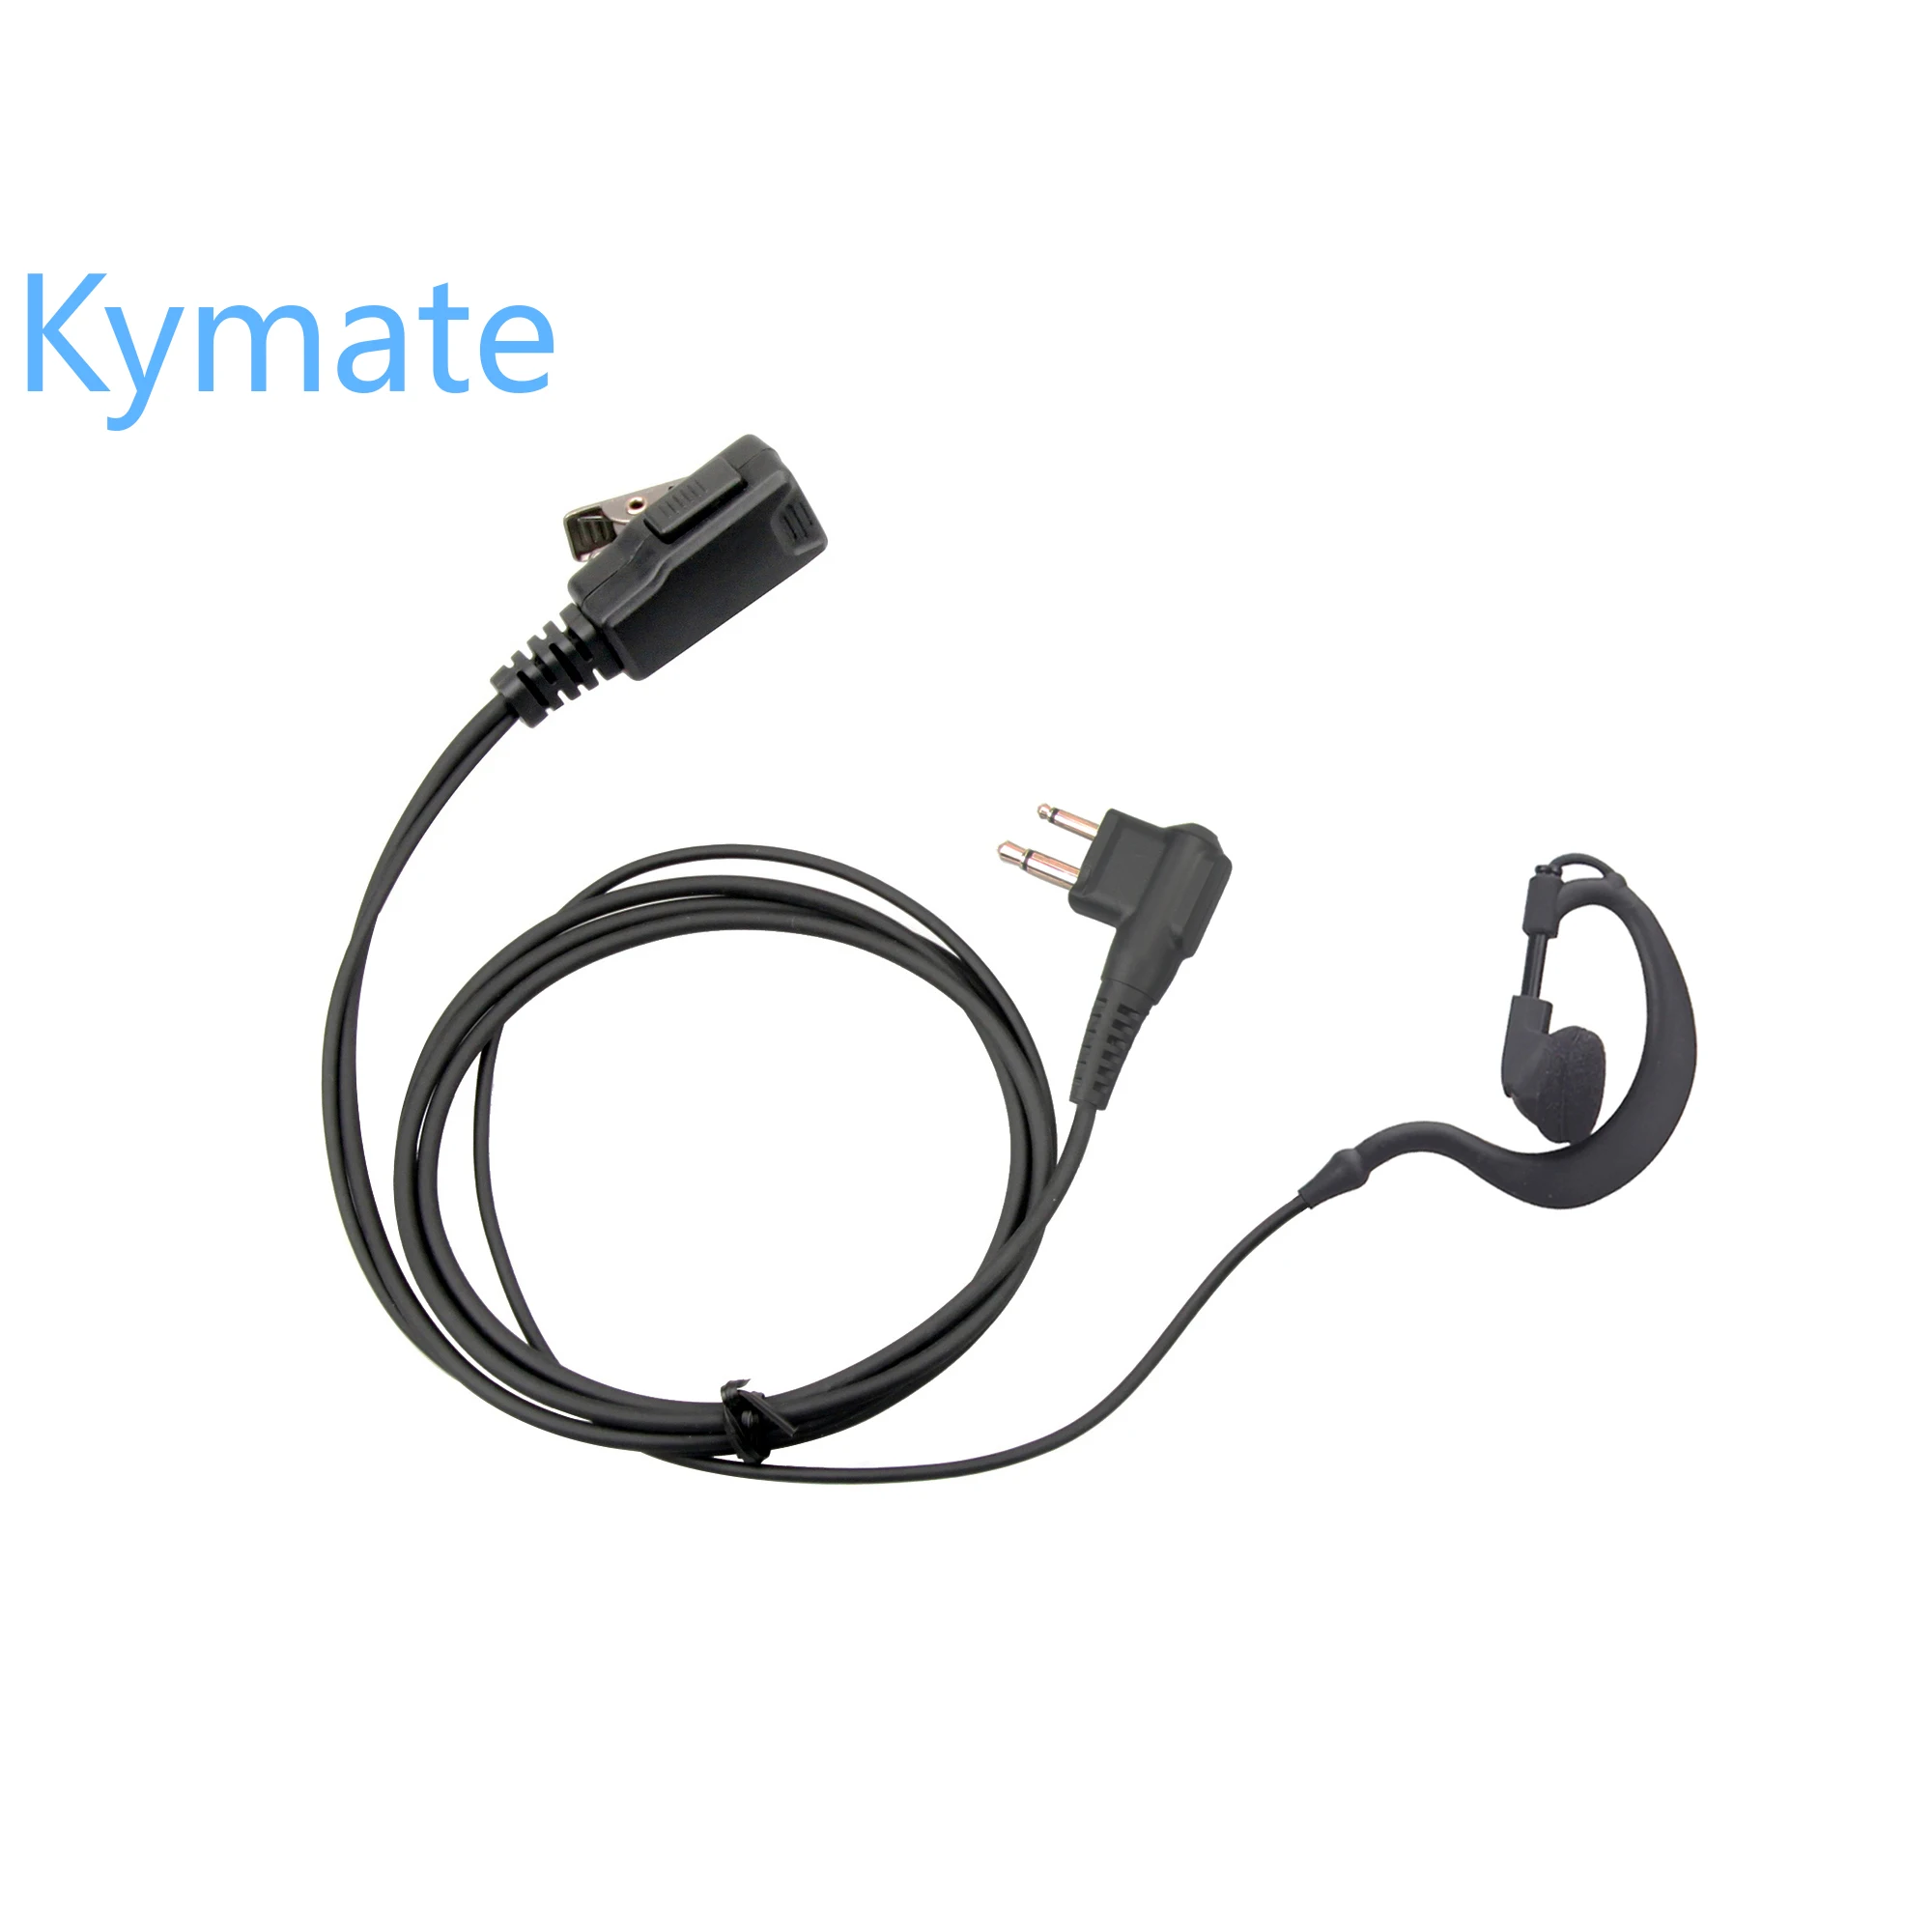 Kymate 2PIN G3-Shape Earpiece Headest Earphone for Motorola Walkie Talkie CP040 EP450 GP300 GP88 CT150 CP140 (10 Packs)